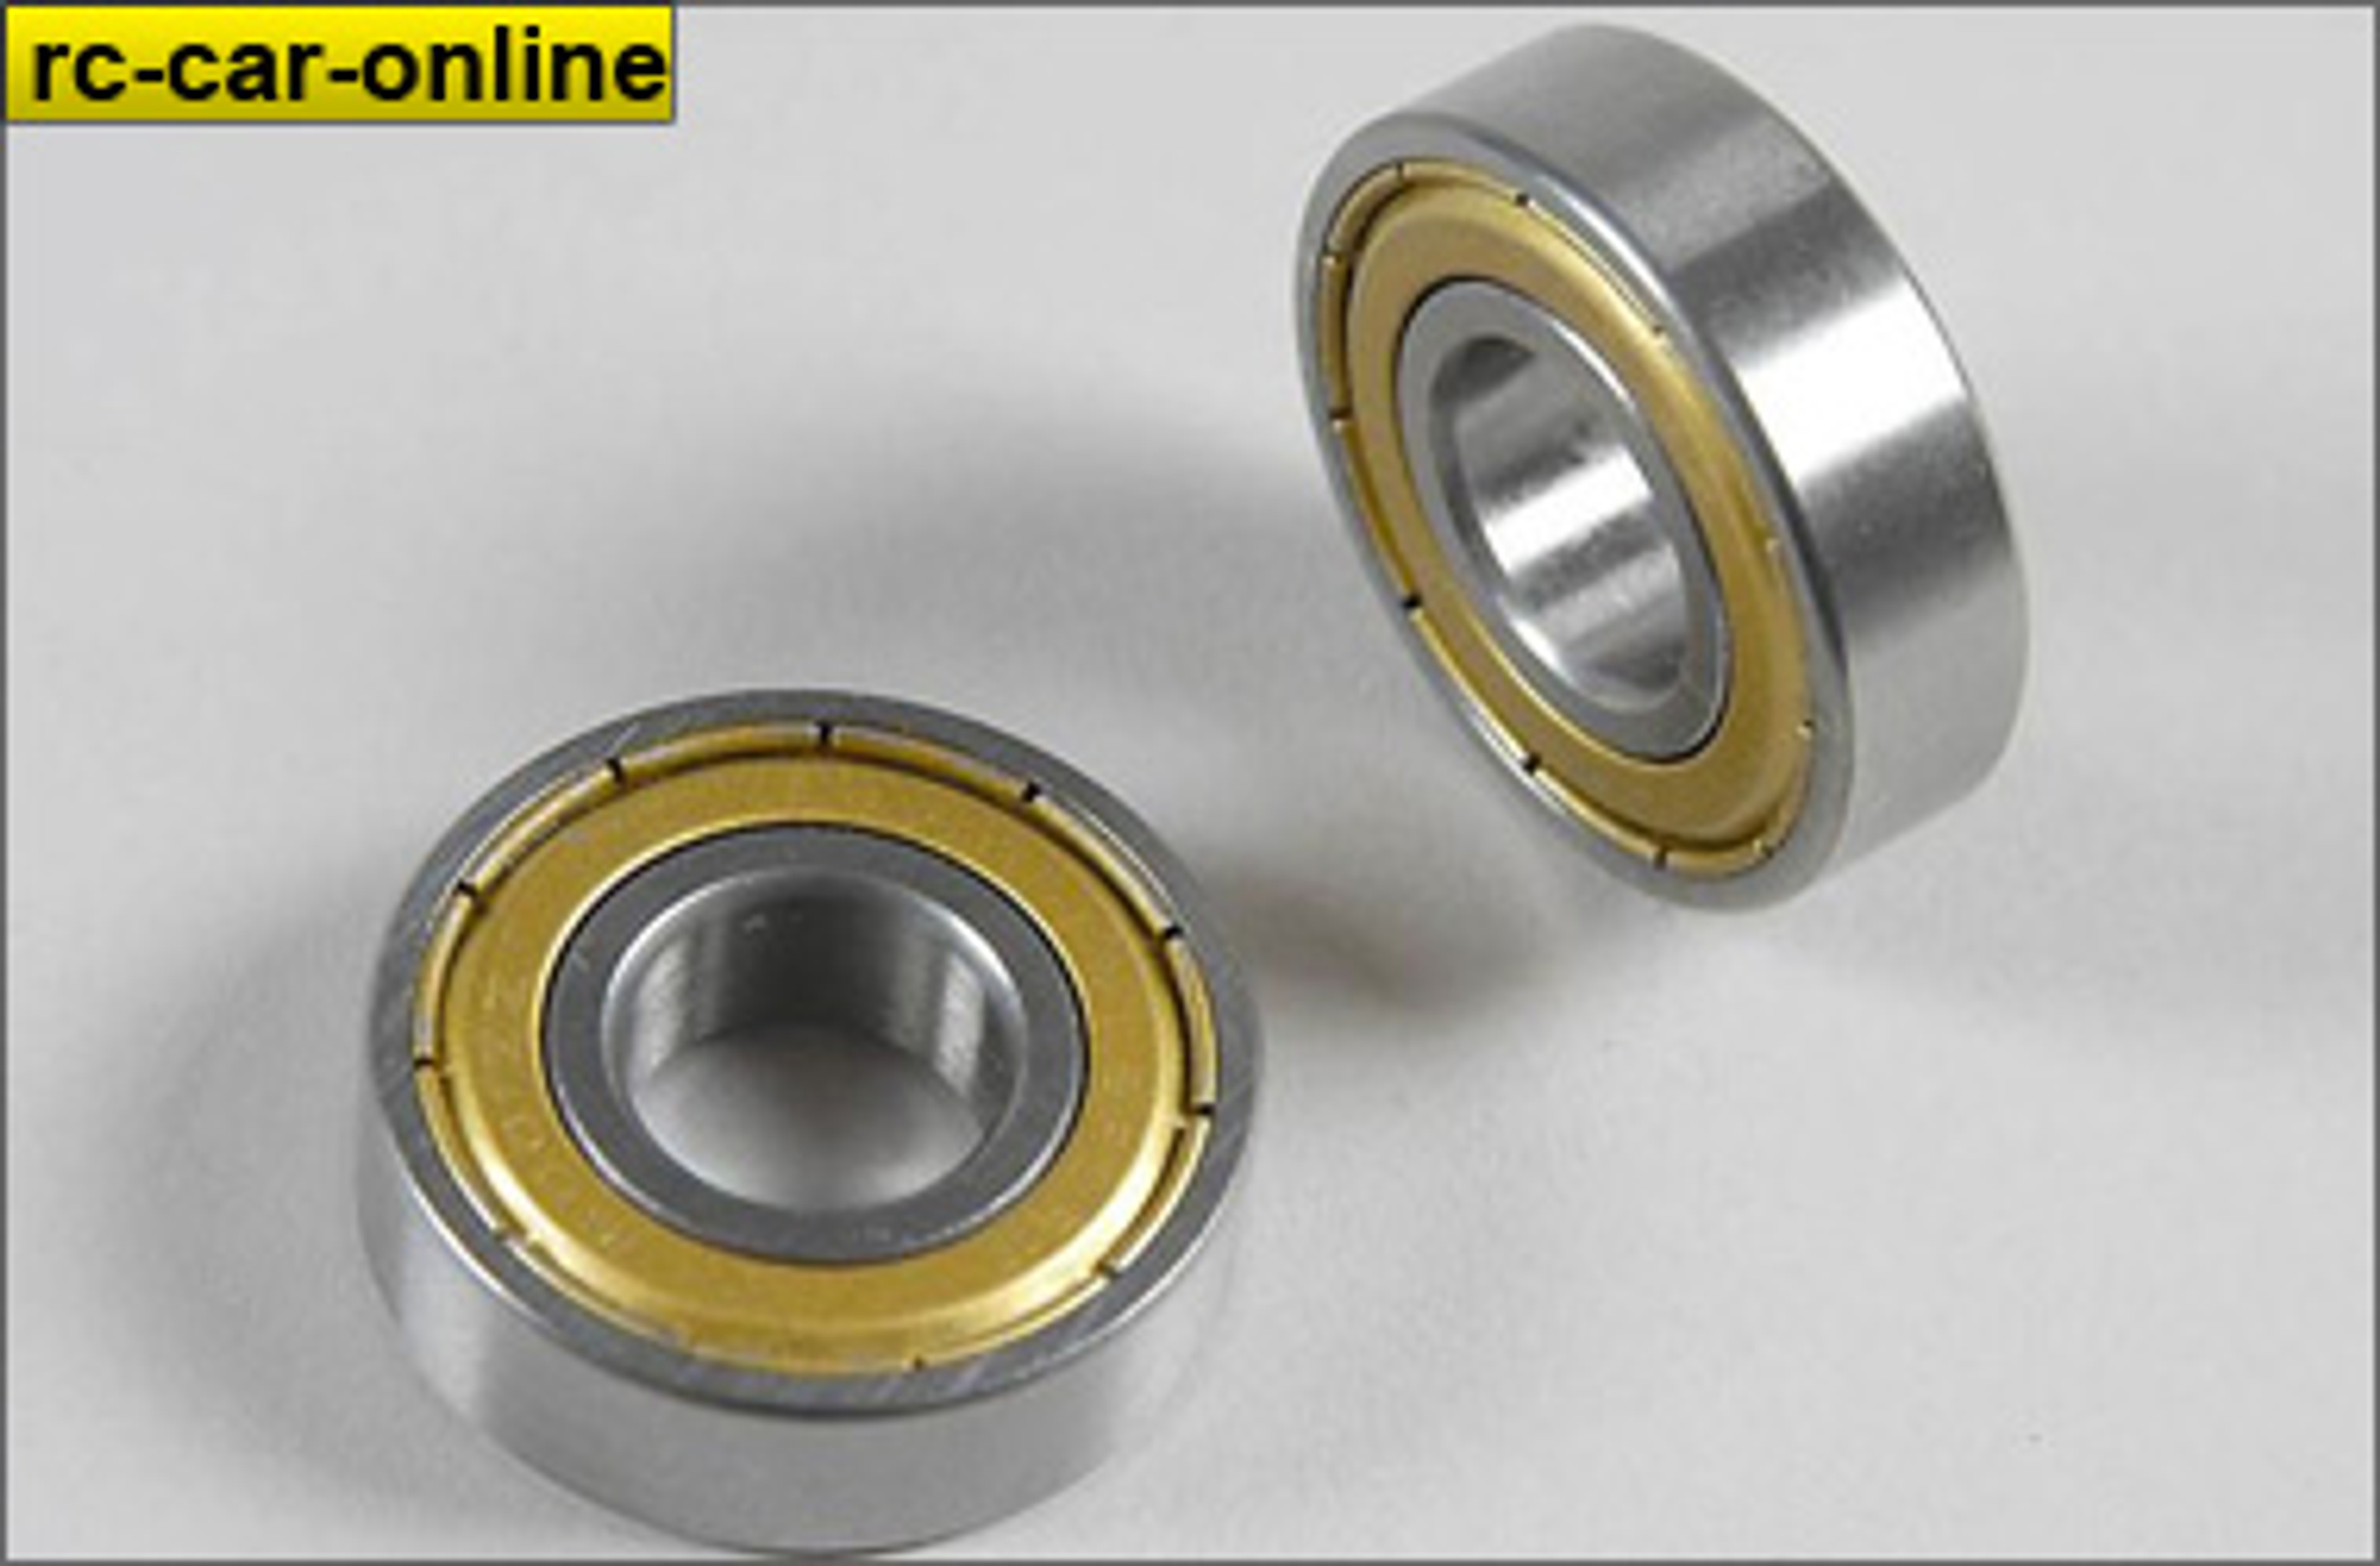 6063/05 FG bearing set 12x28x8 with grease filling - 2 pcs